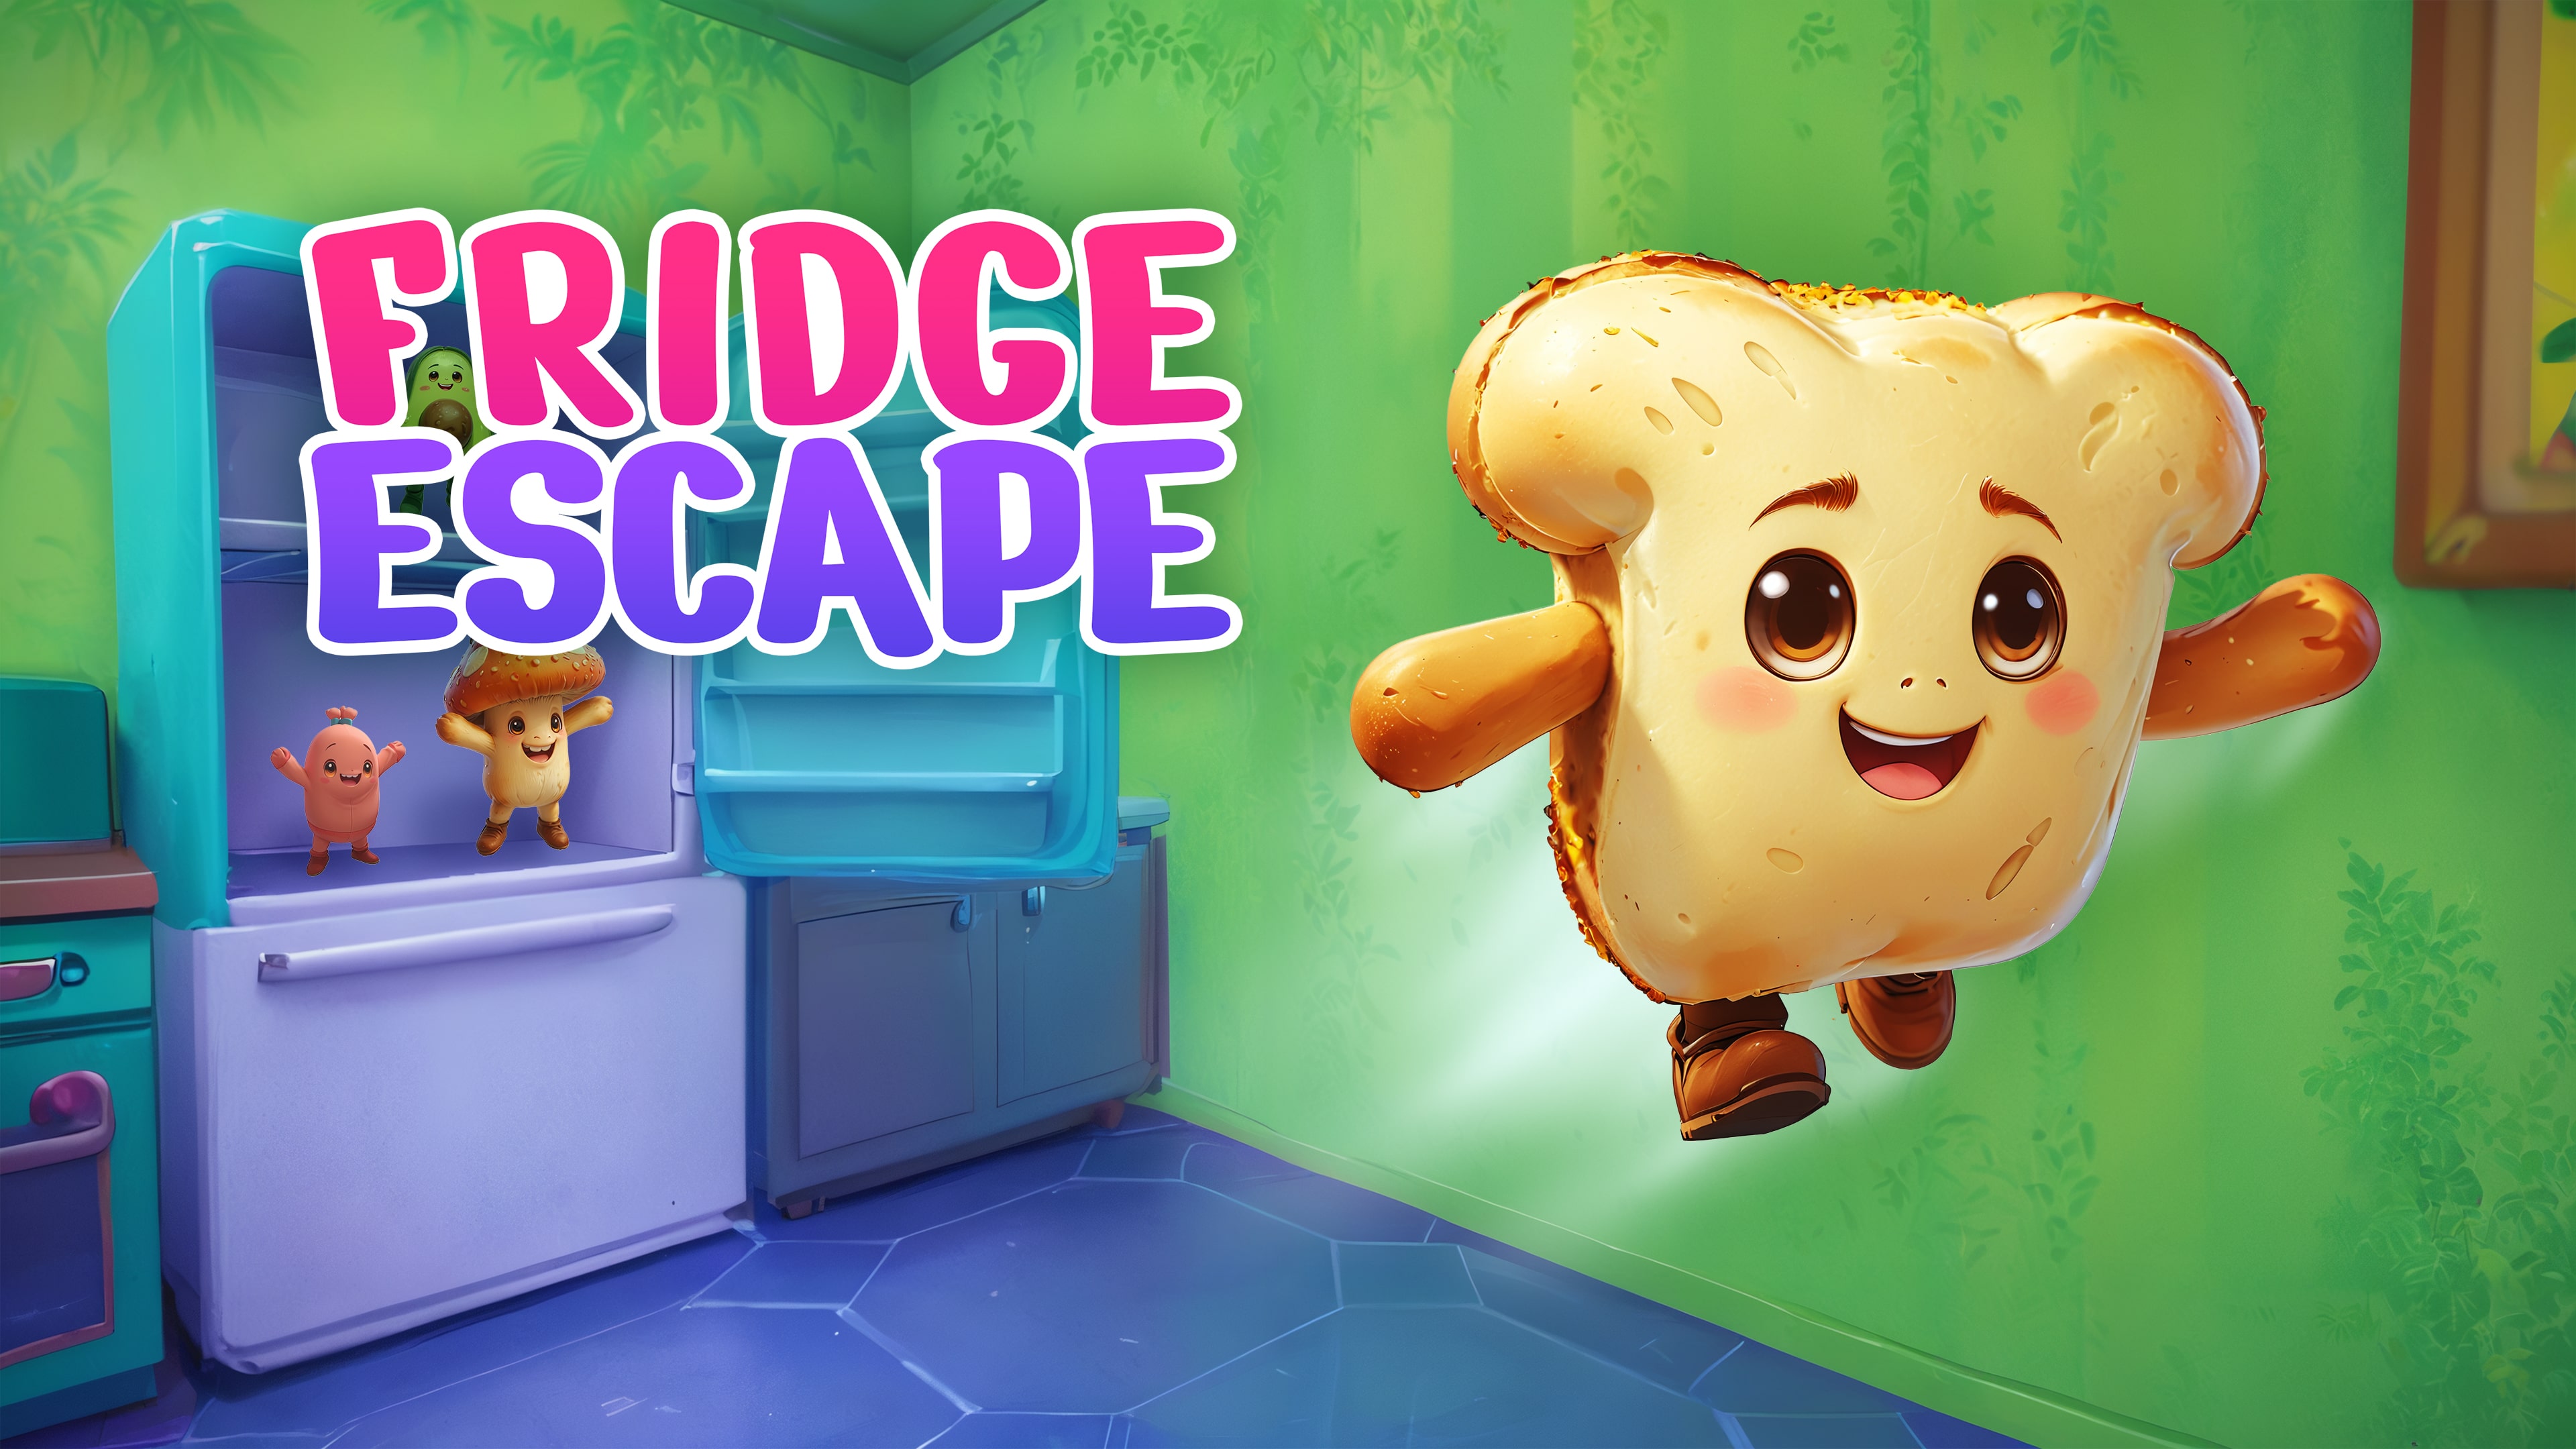 Fridge Escape